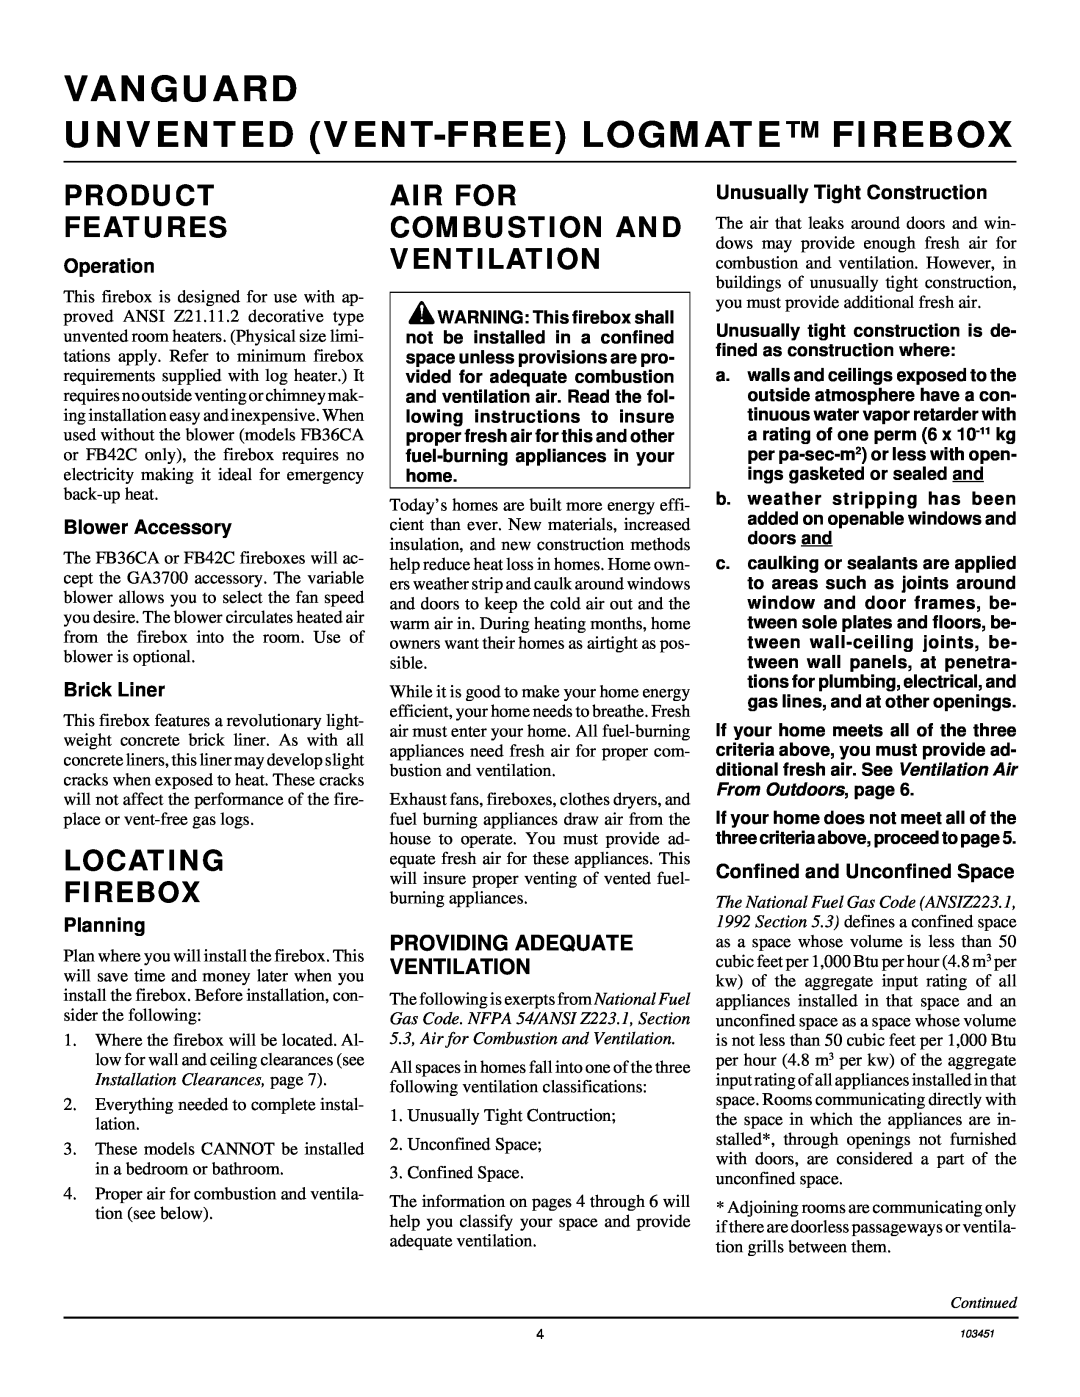 Desa FB36NCA, FB42NC, FB36CA, FB42C Product Features, Locating Firebox, Air For Combustion And Ventilation, Operation 